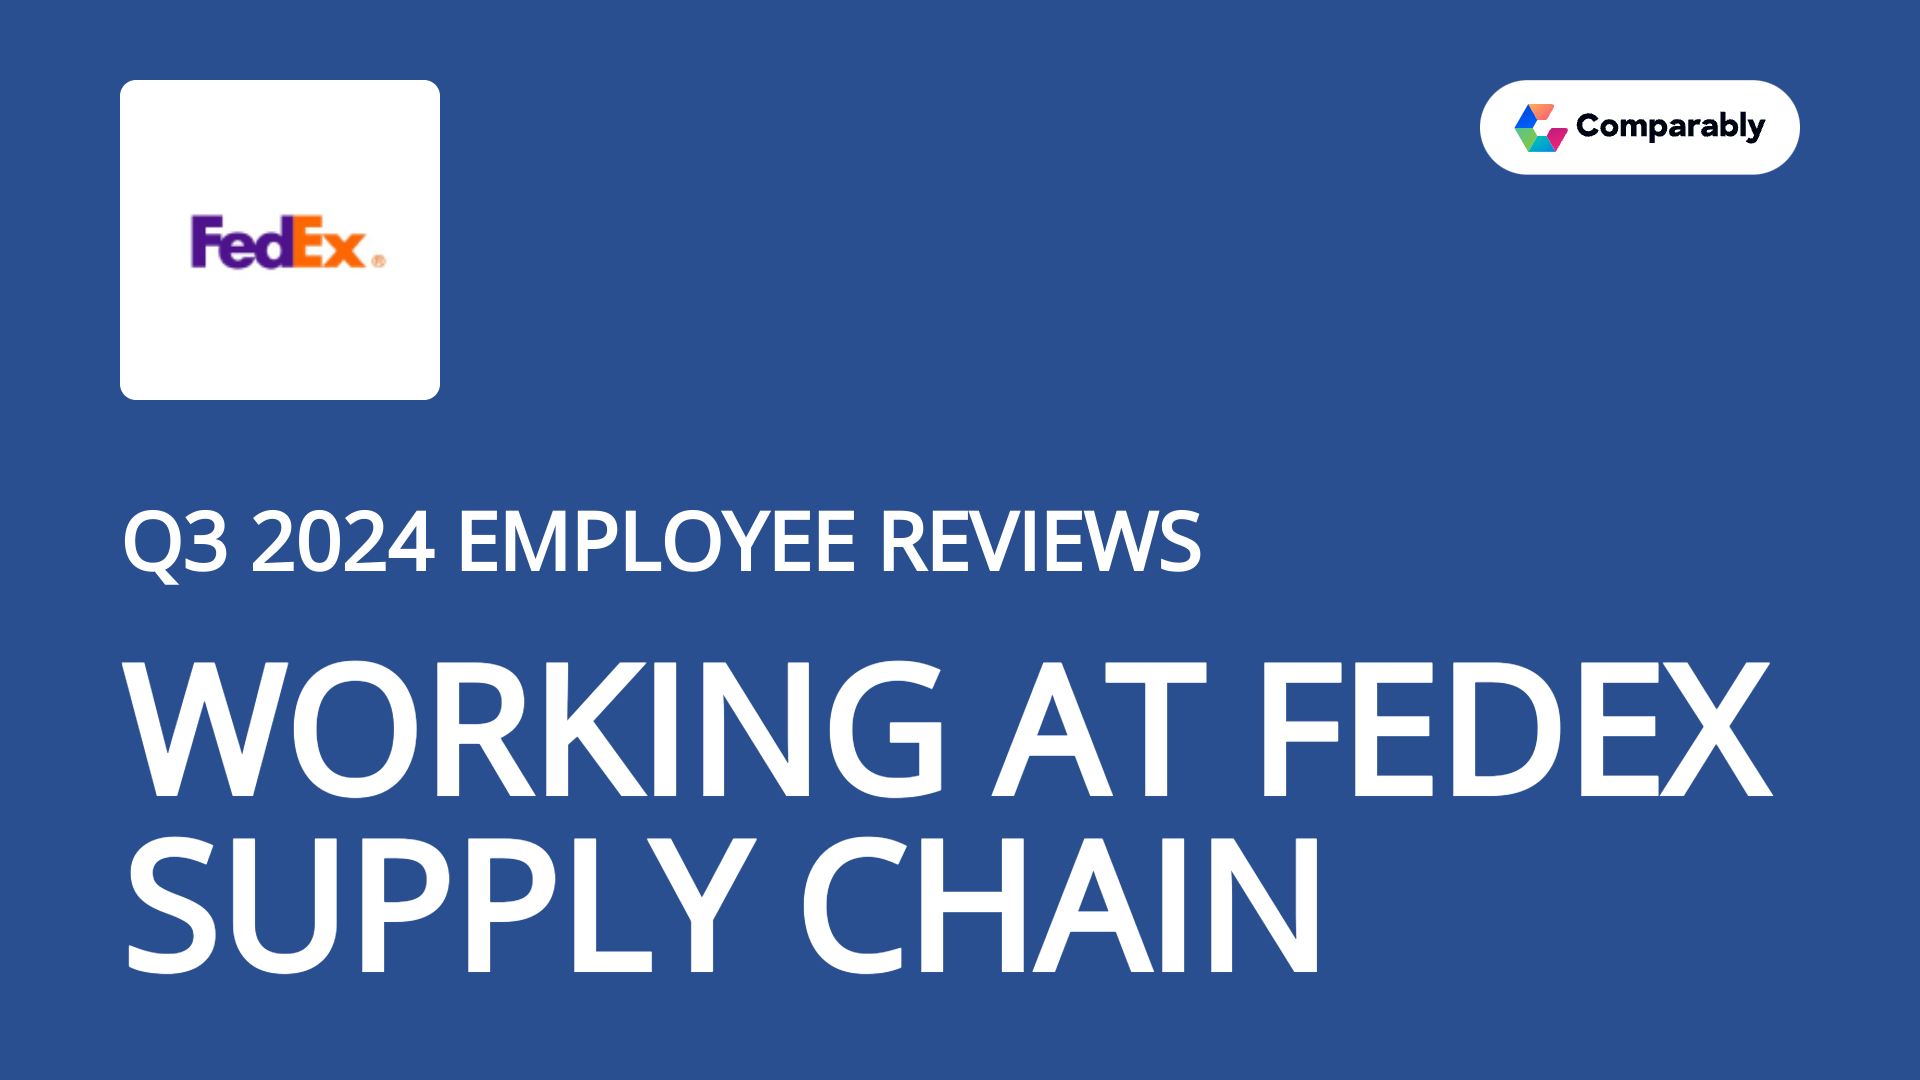 fedex employee reviews